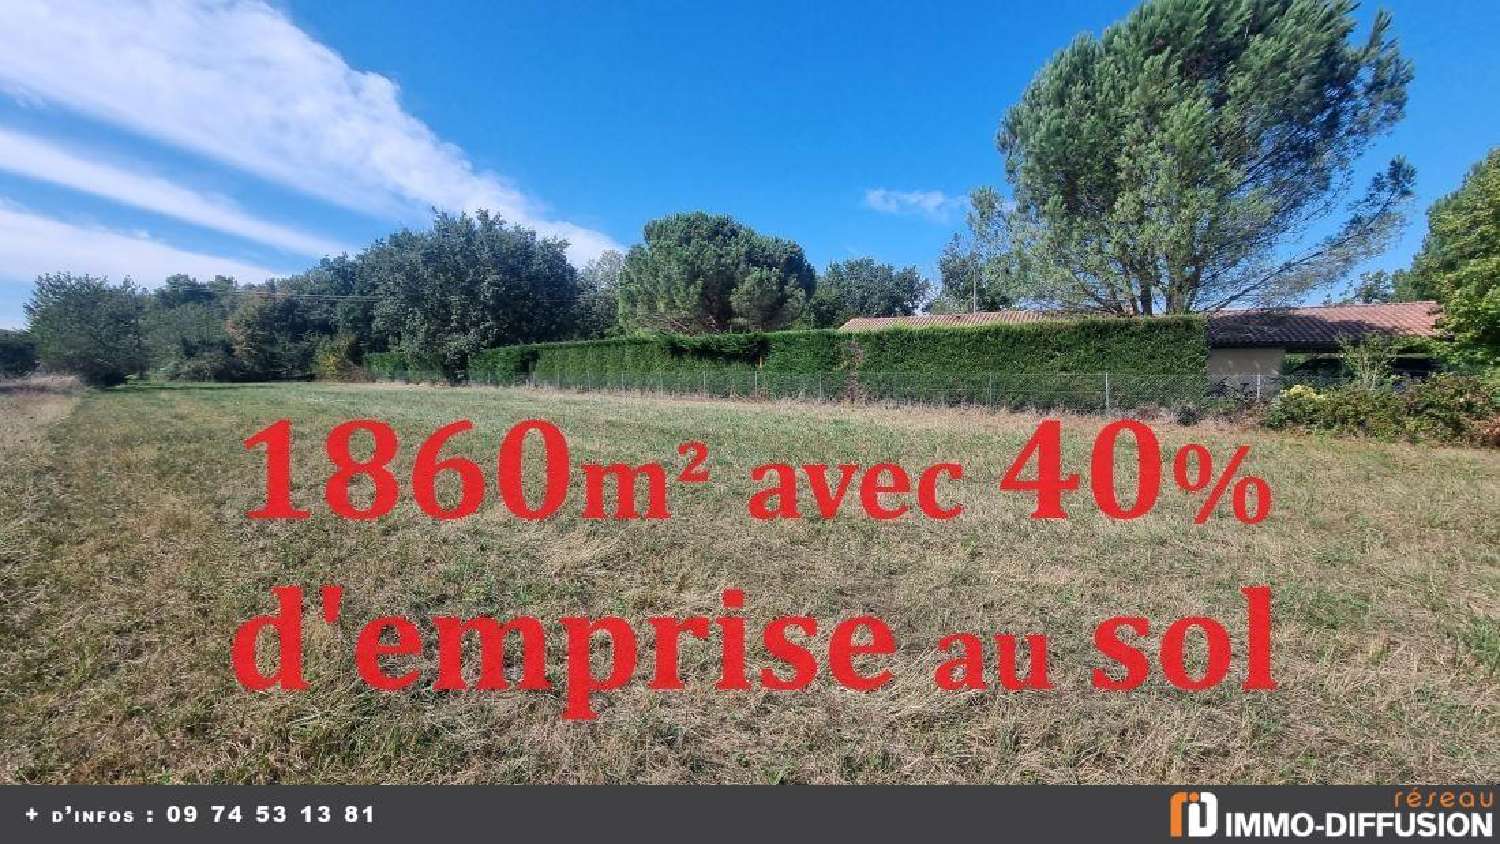  for sale terrain Buzet-sur-Tarn Haute-Garonne 1